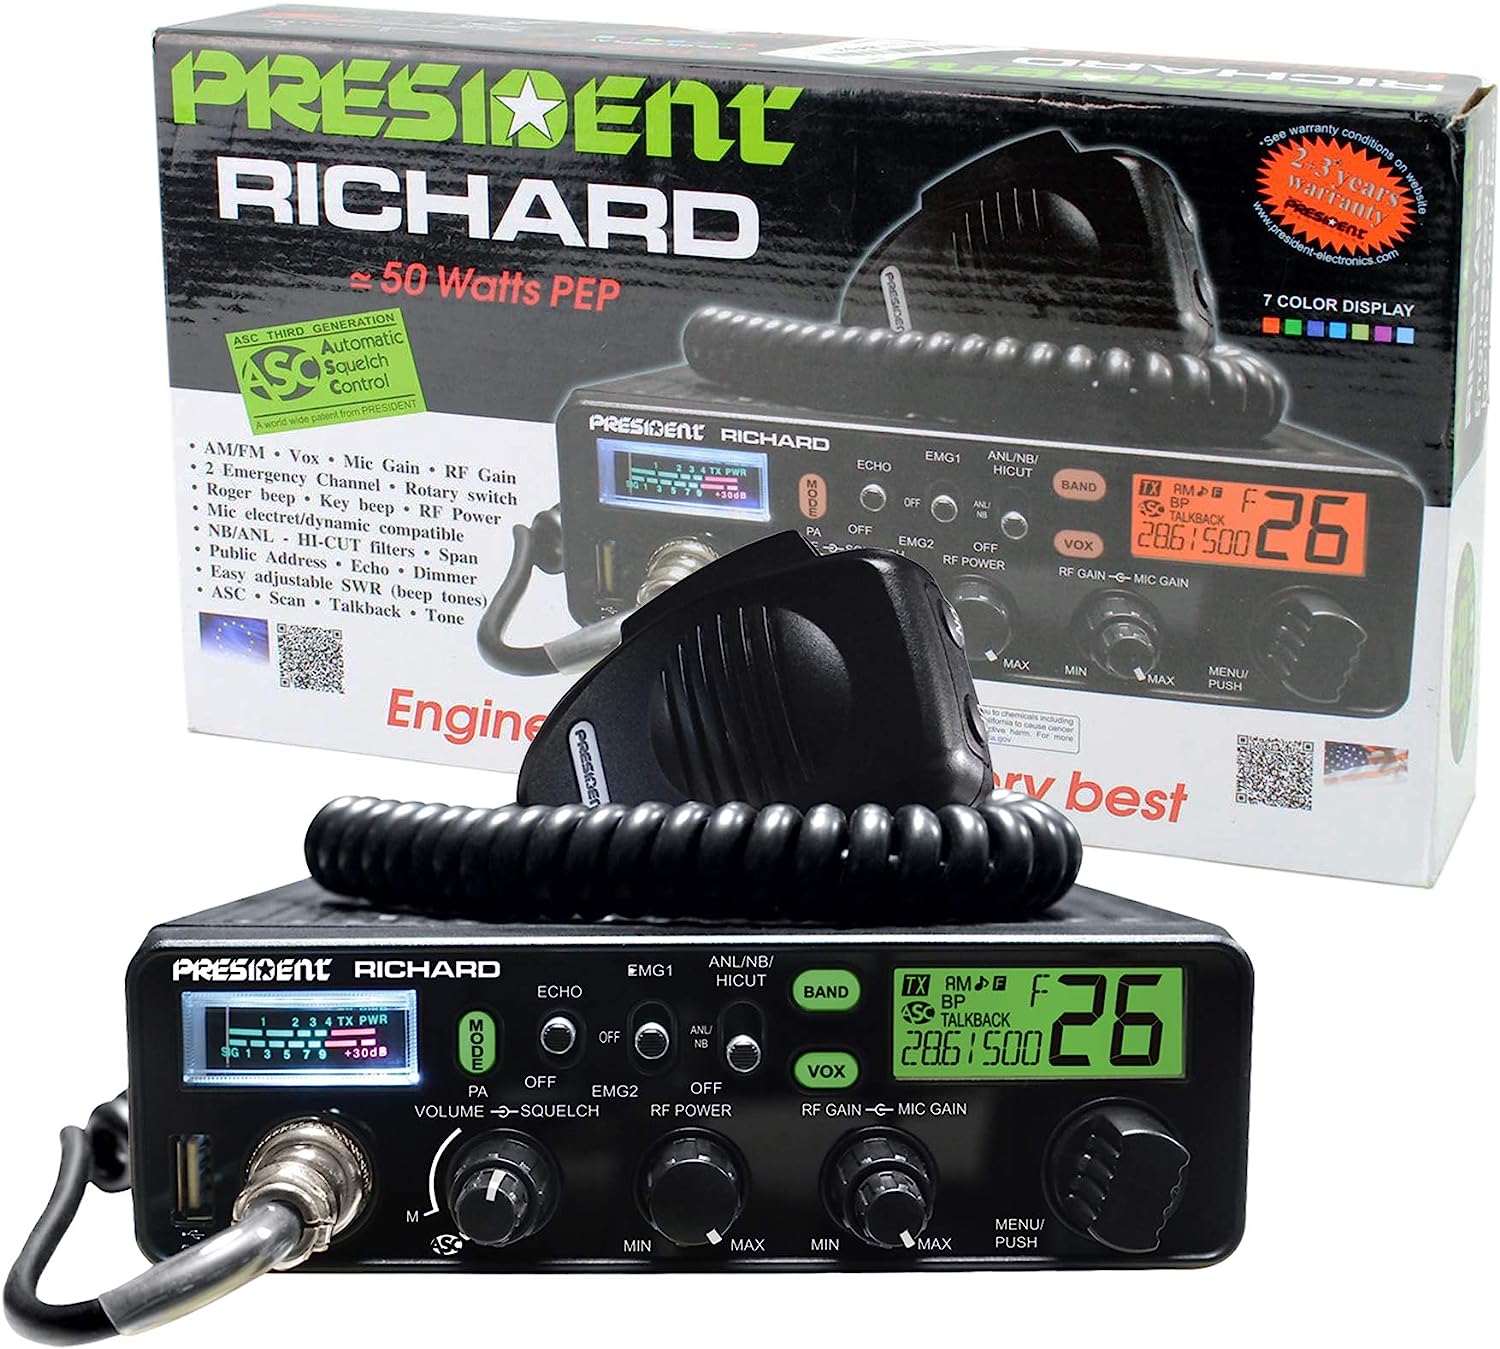 President Richard 10 Meter Ham Radio, 50W PEP